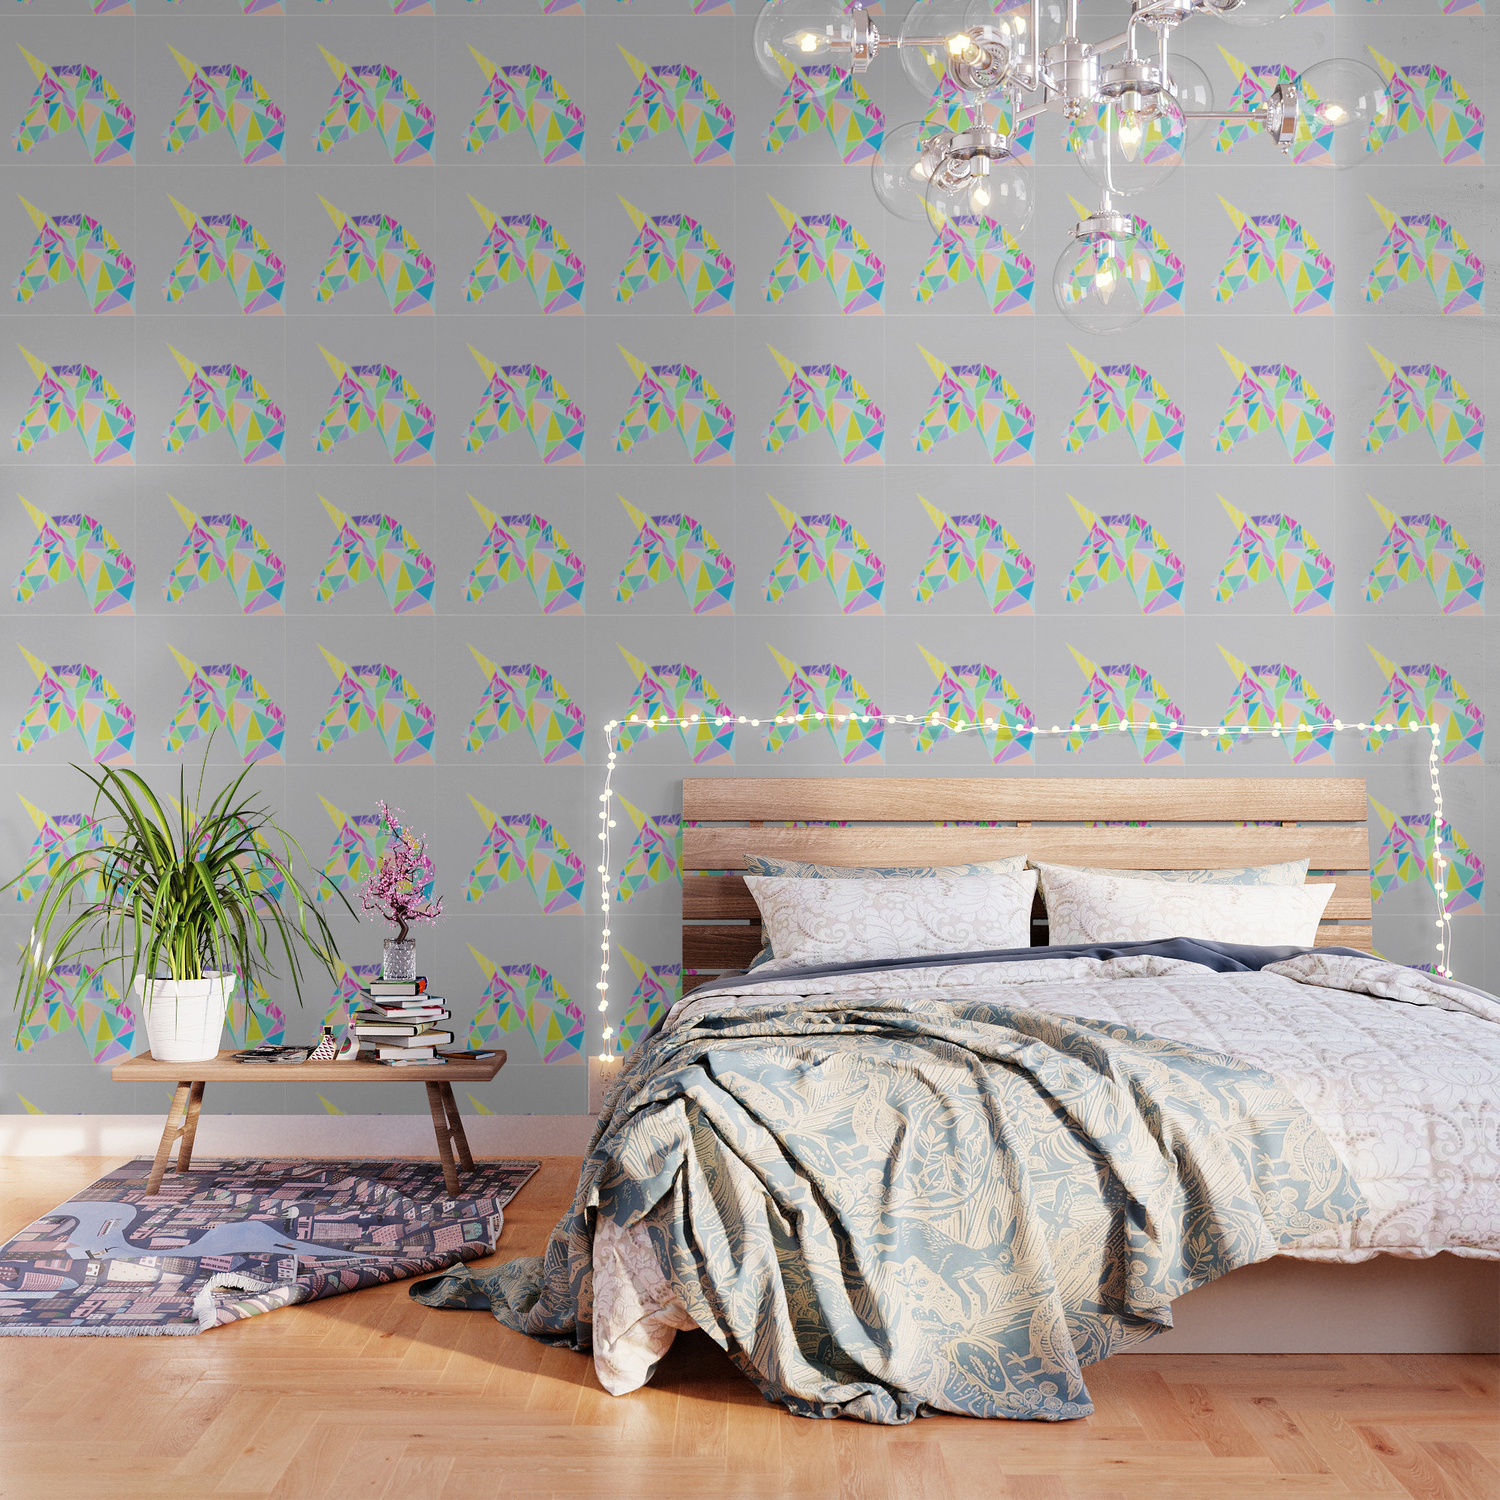 Pastel Unicorn Wallpapers